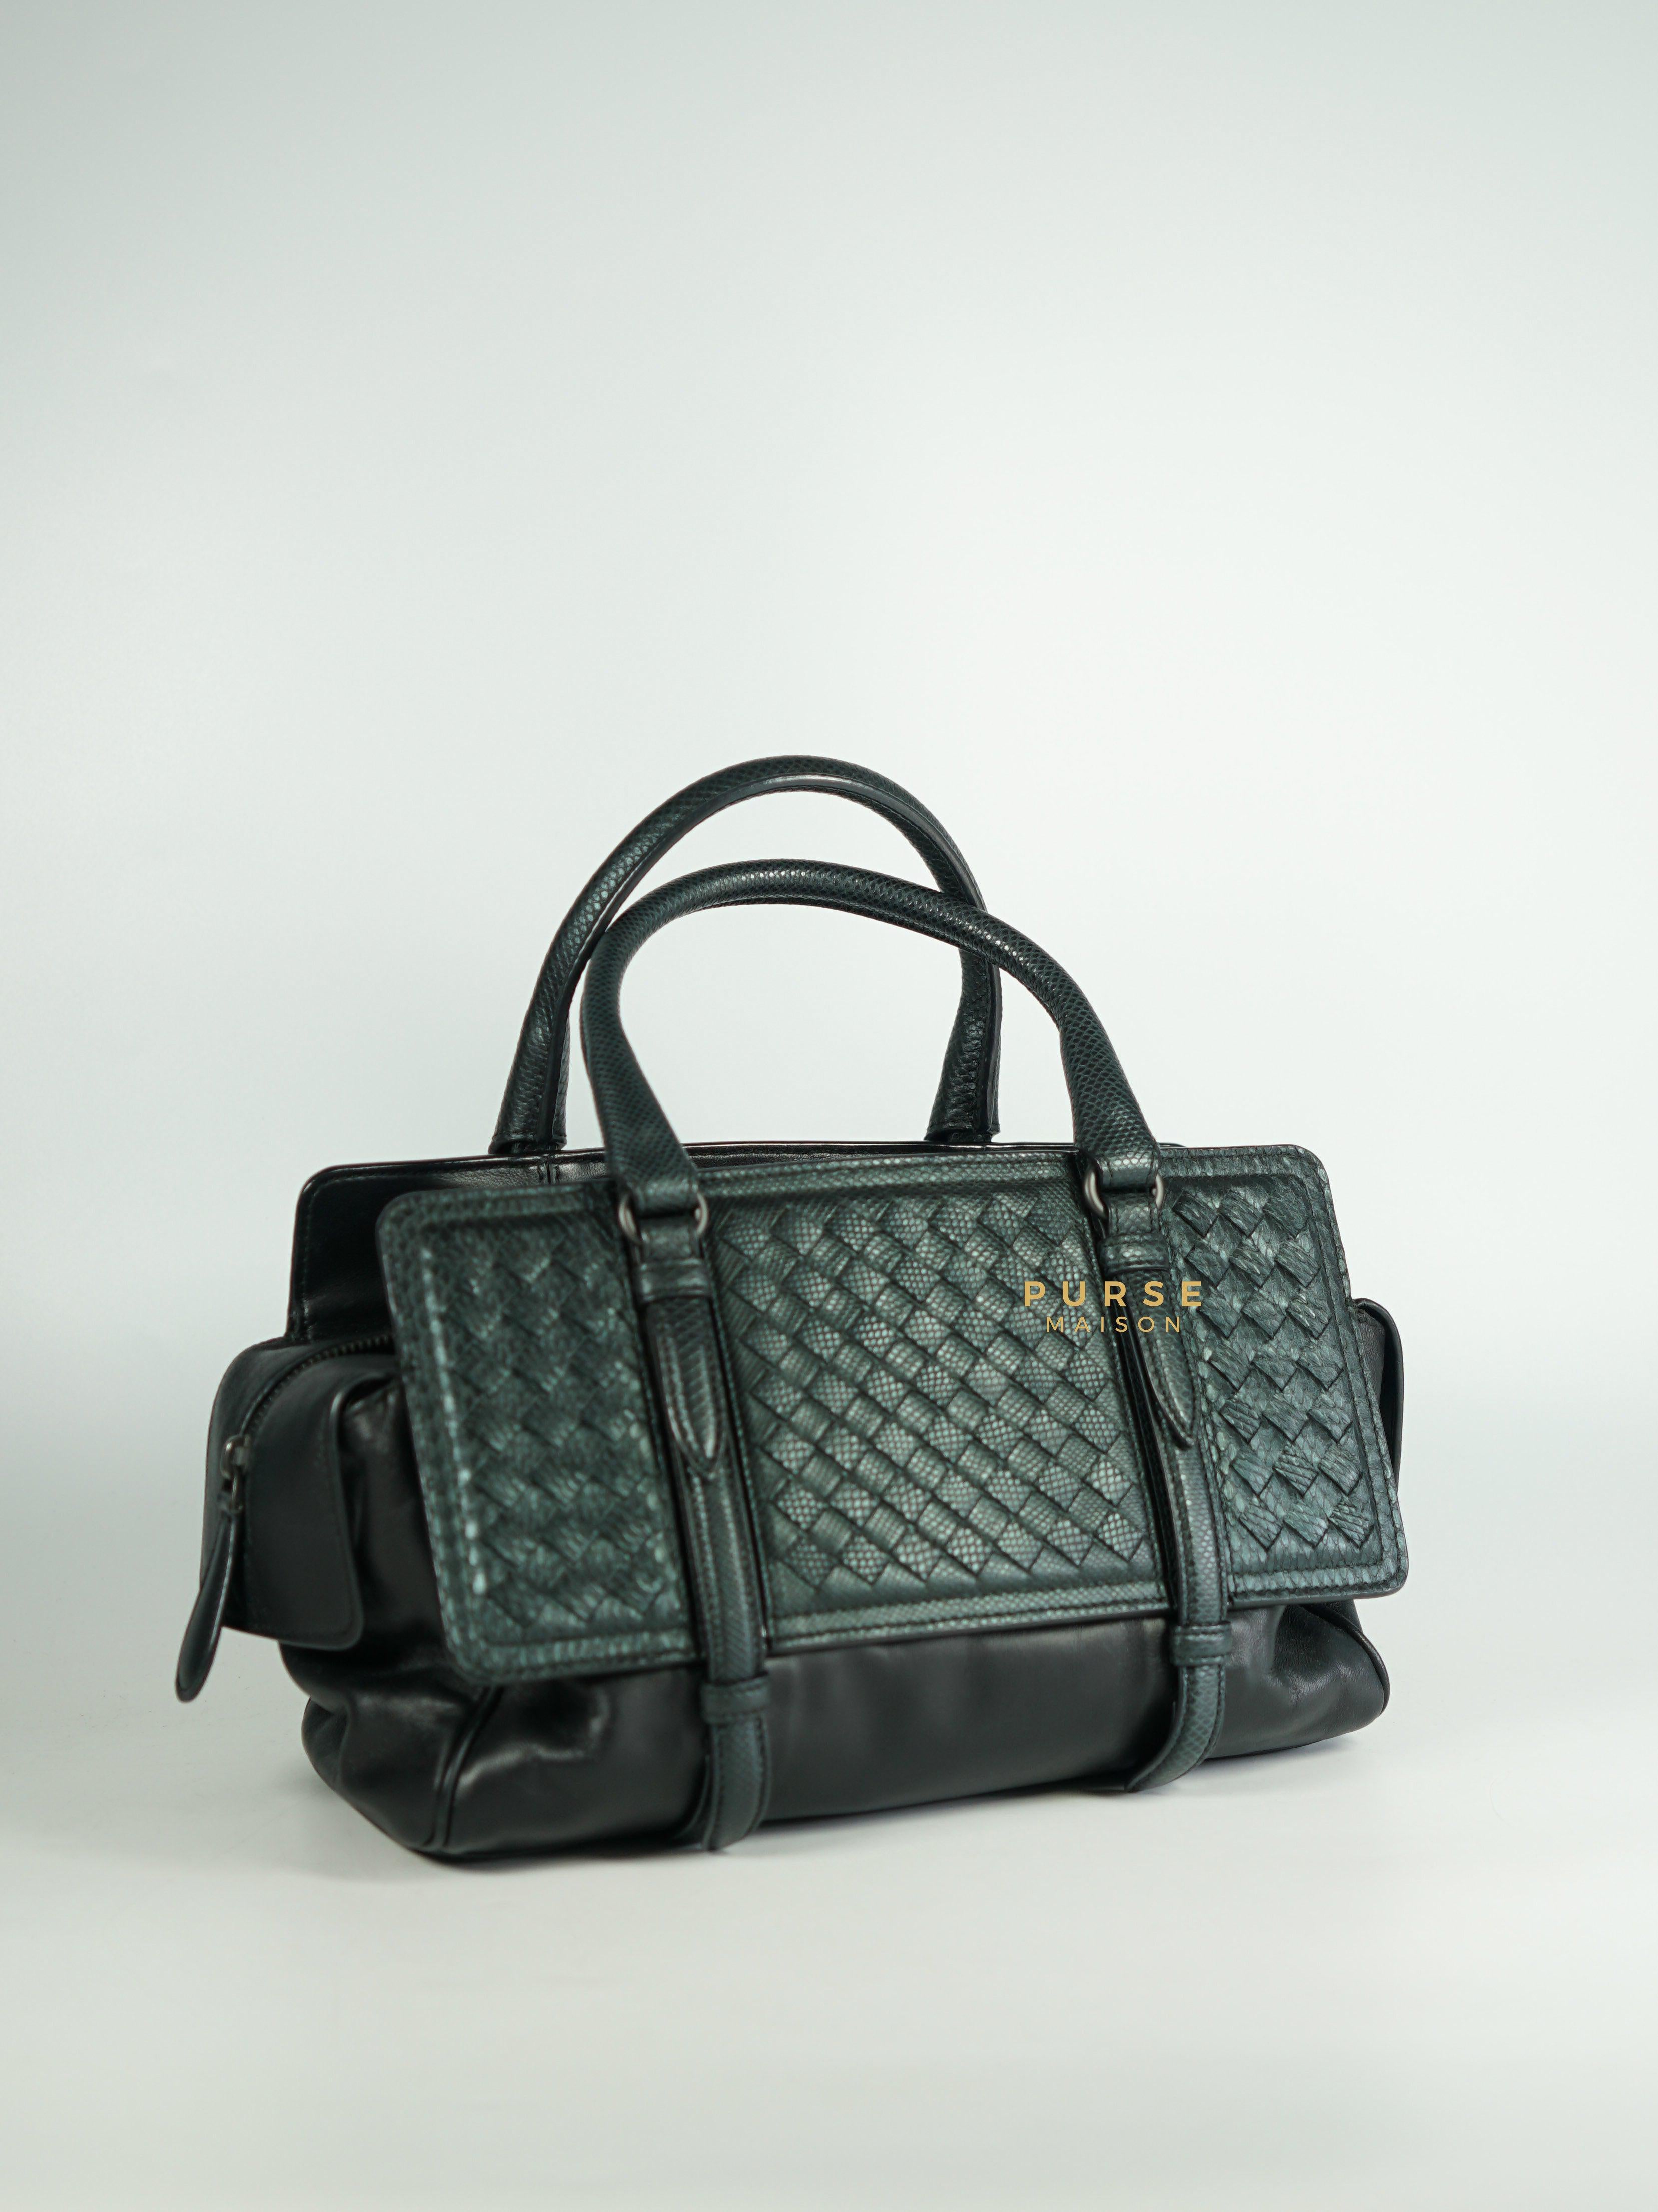 Bottega Veneta Monaco Intrecciato Leather Hand Bag | Purse Maison Luxury Bags Shop